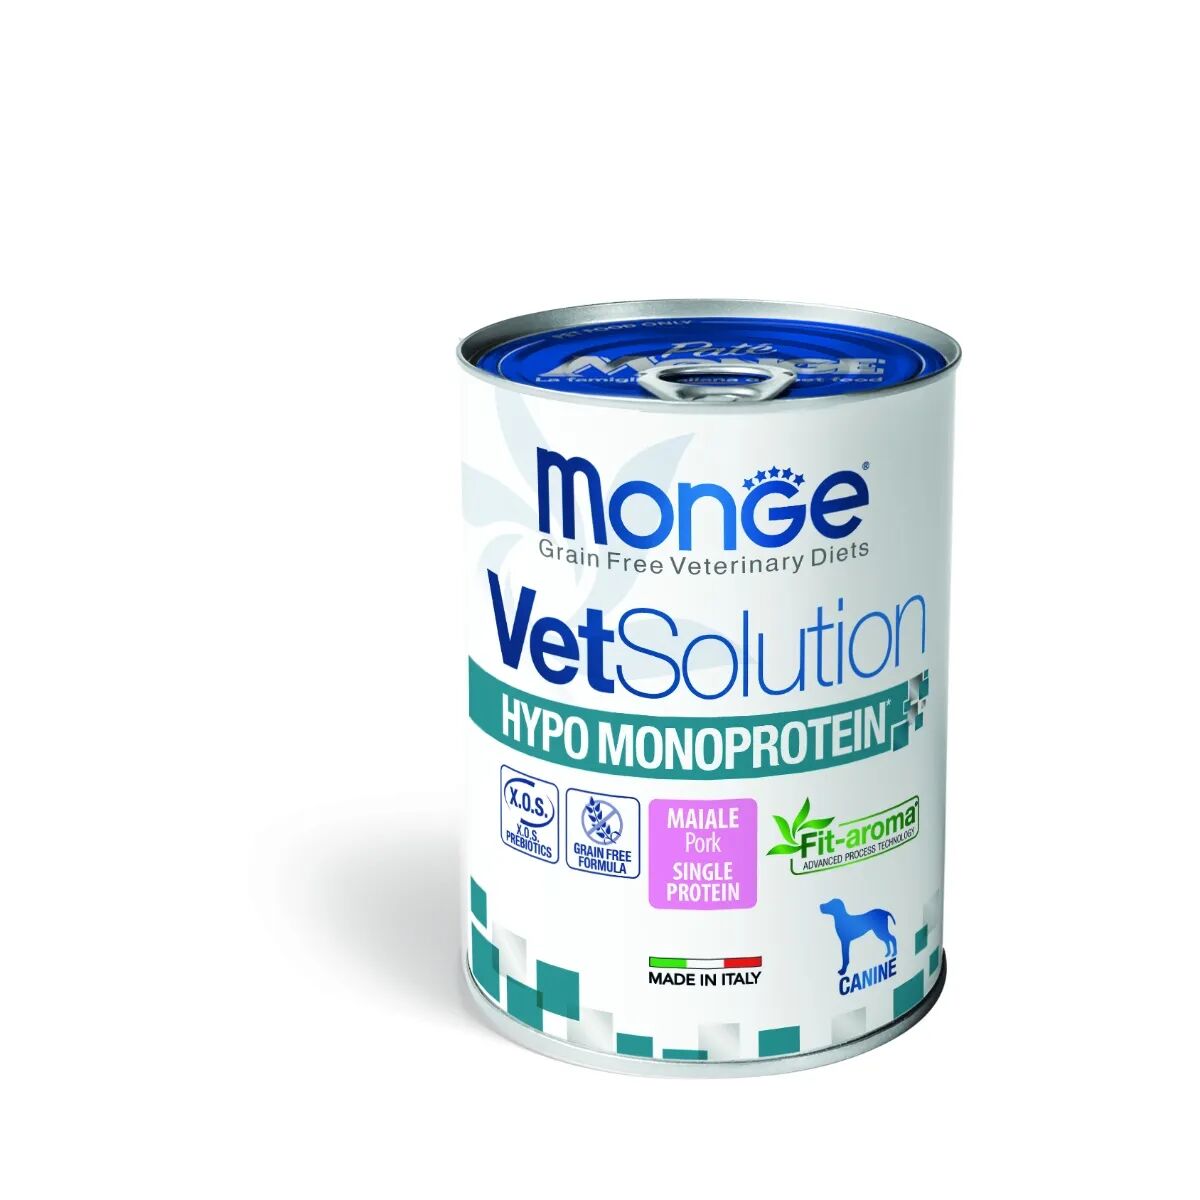 MONGE Vet Solution Hypo Monoproteico Dog 400G MAIALE